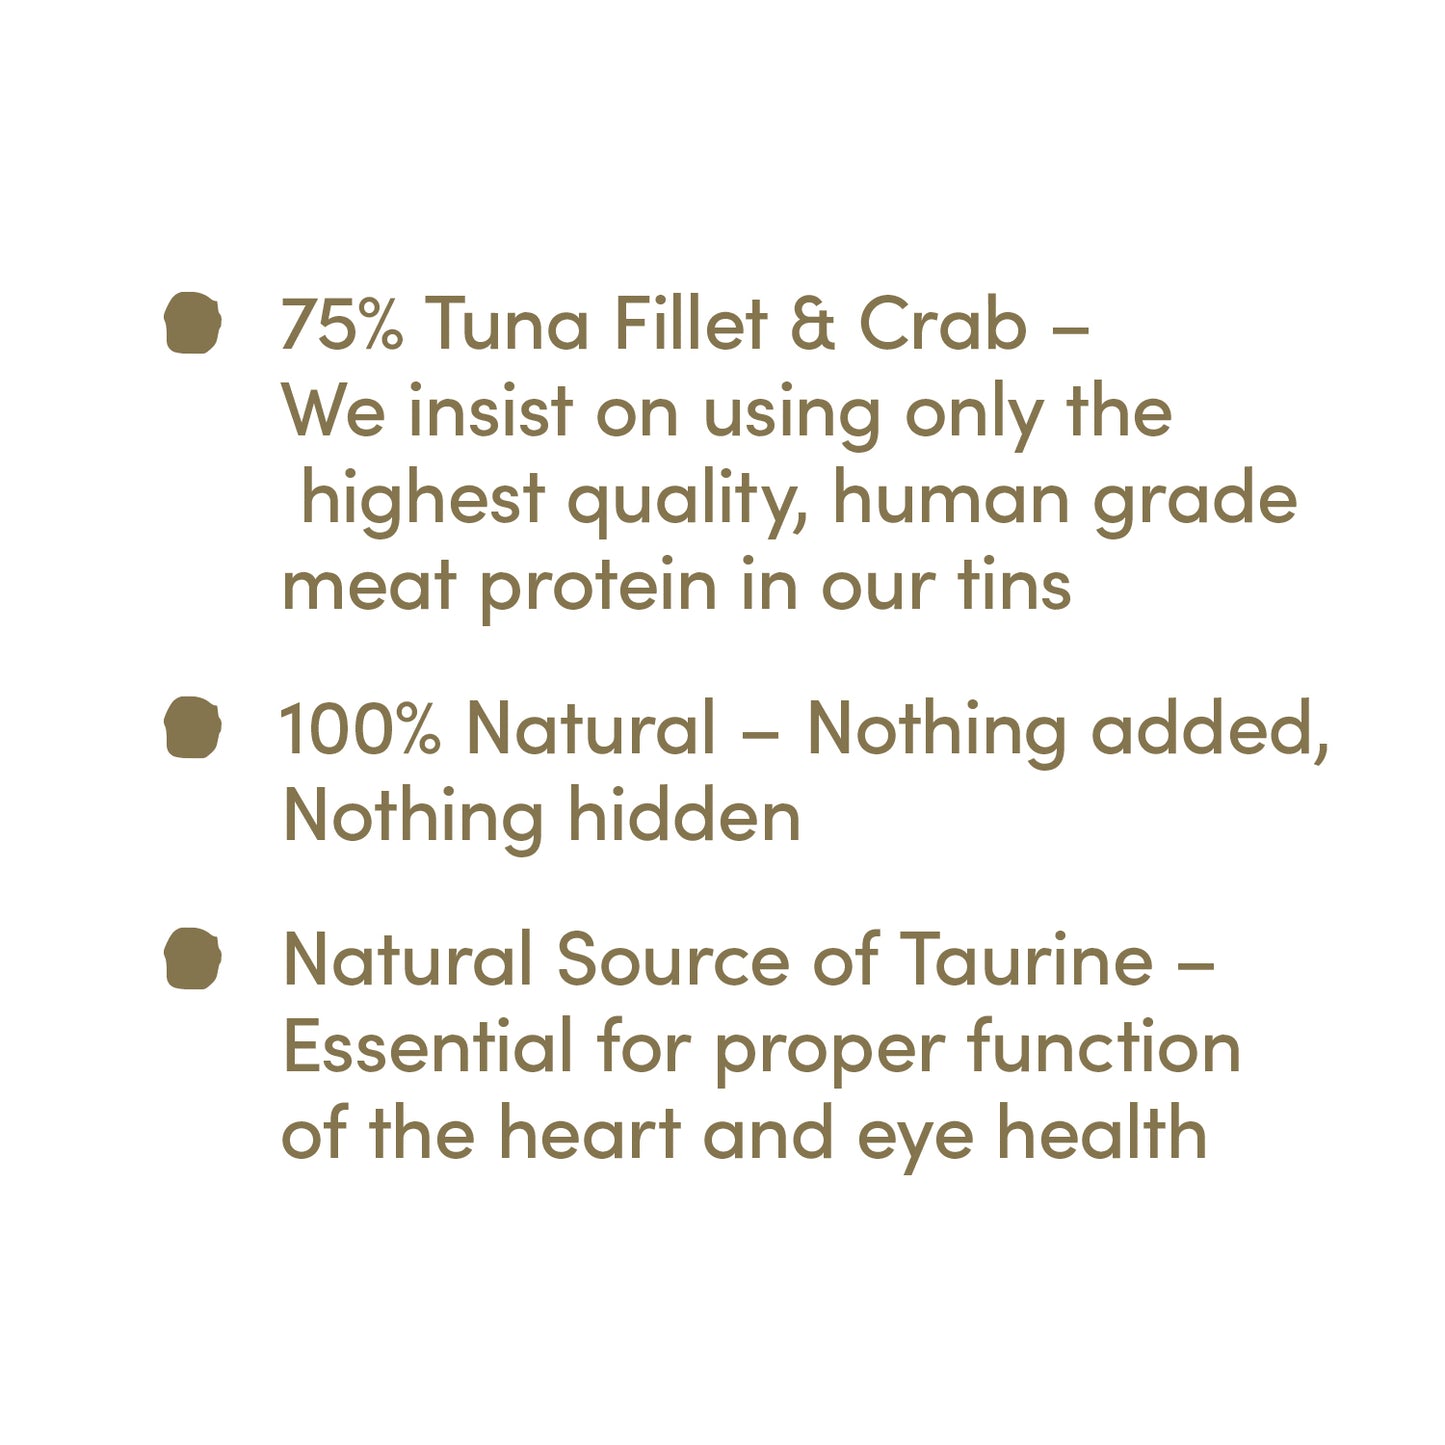 Applaws - Cat Tin Tuna with Crab